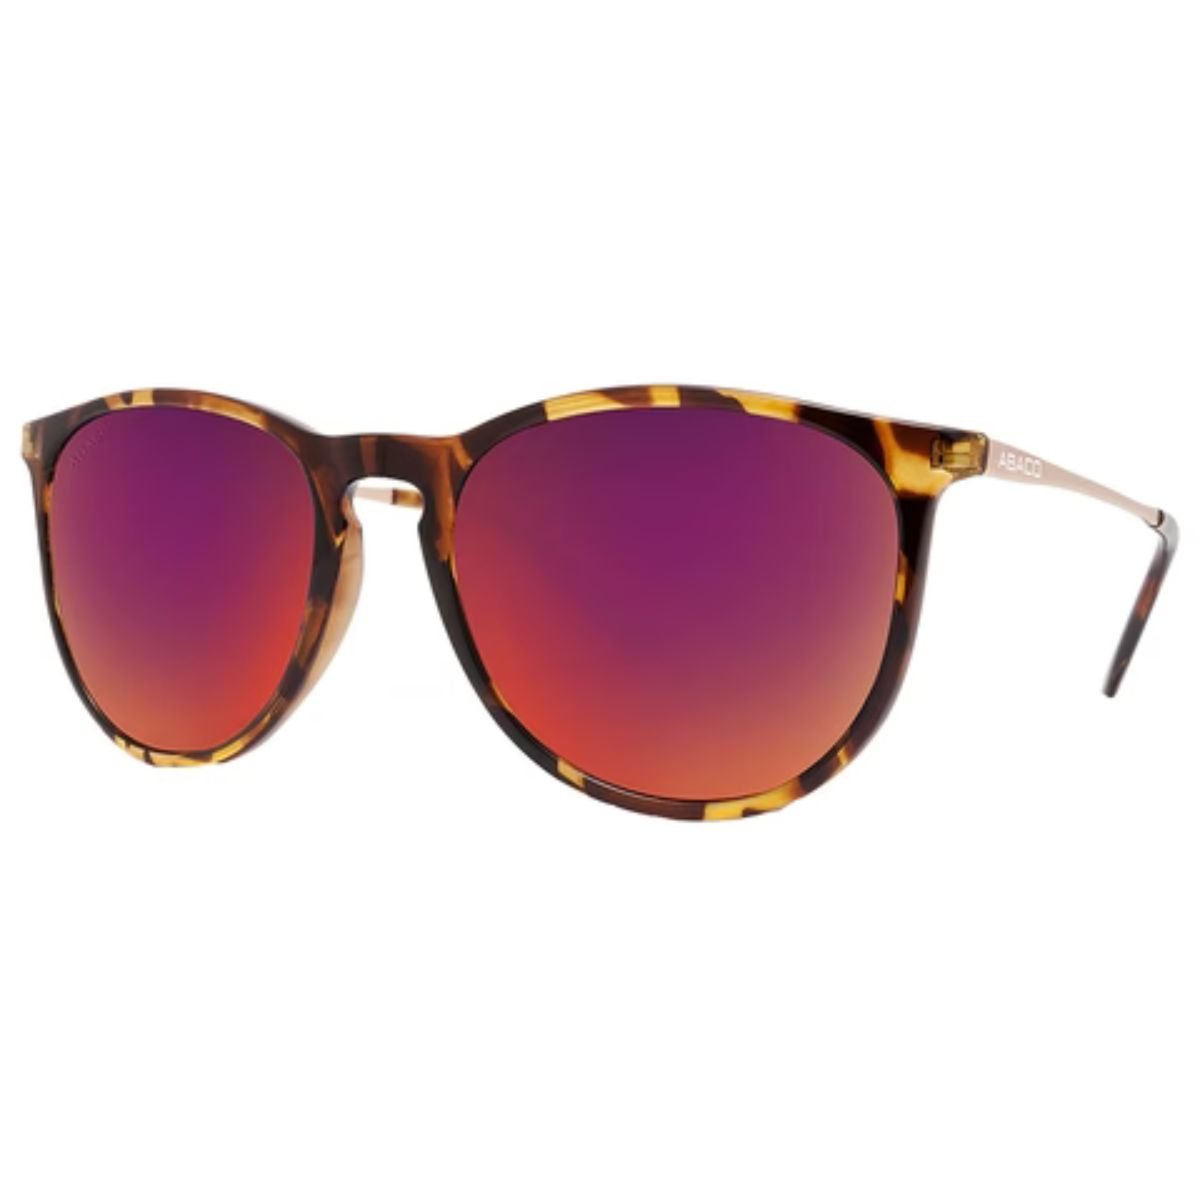 Abaco Piper Sunglasses in Tortoise/Sunset - BoardCo